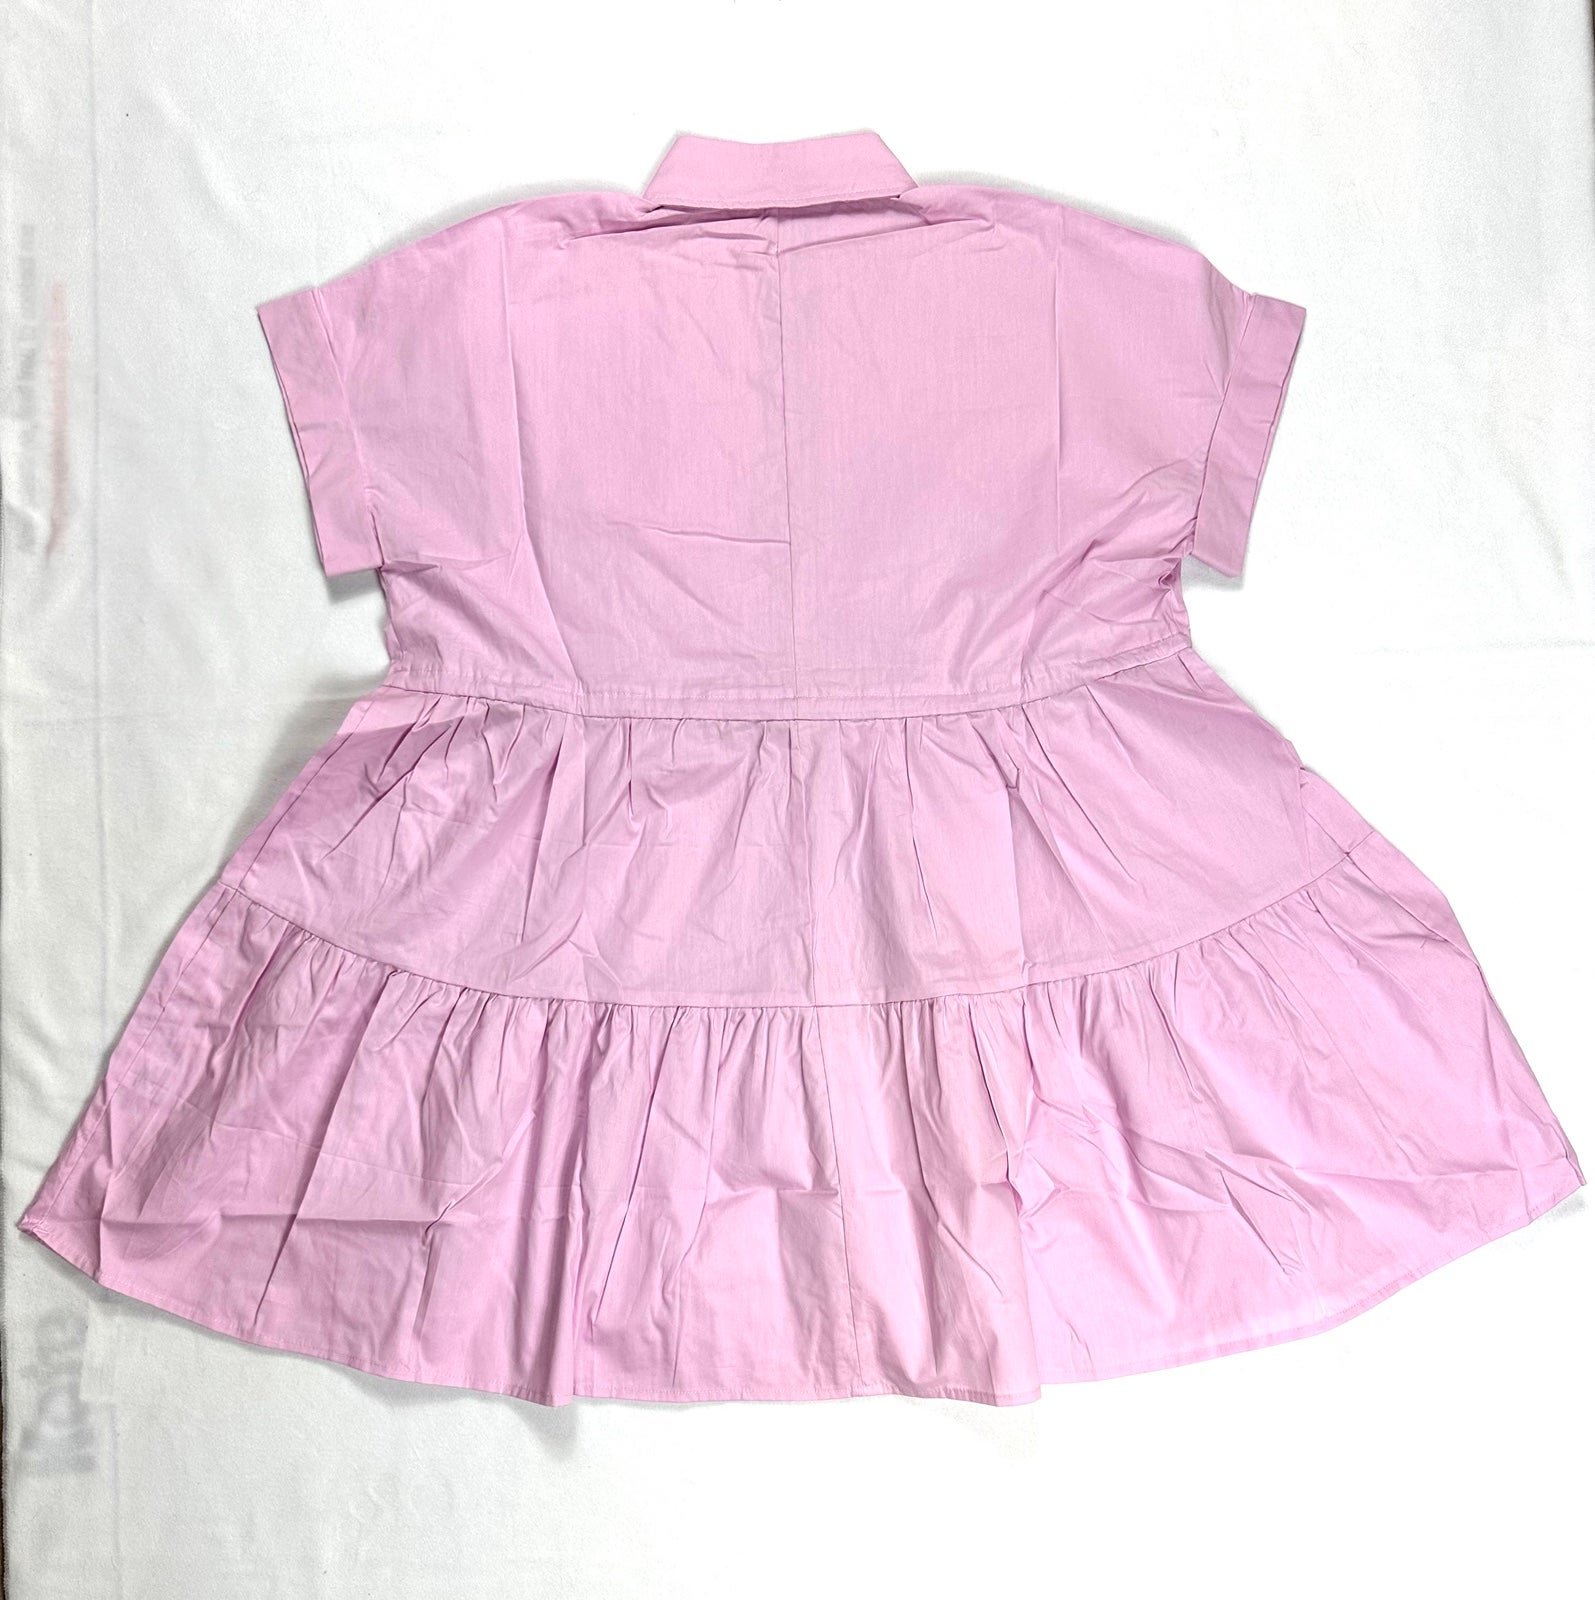 Lavender Twirl Mini Boutique Dress M cEALJKejW